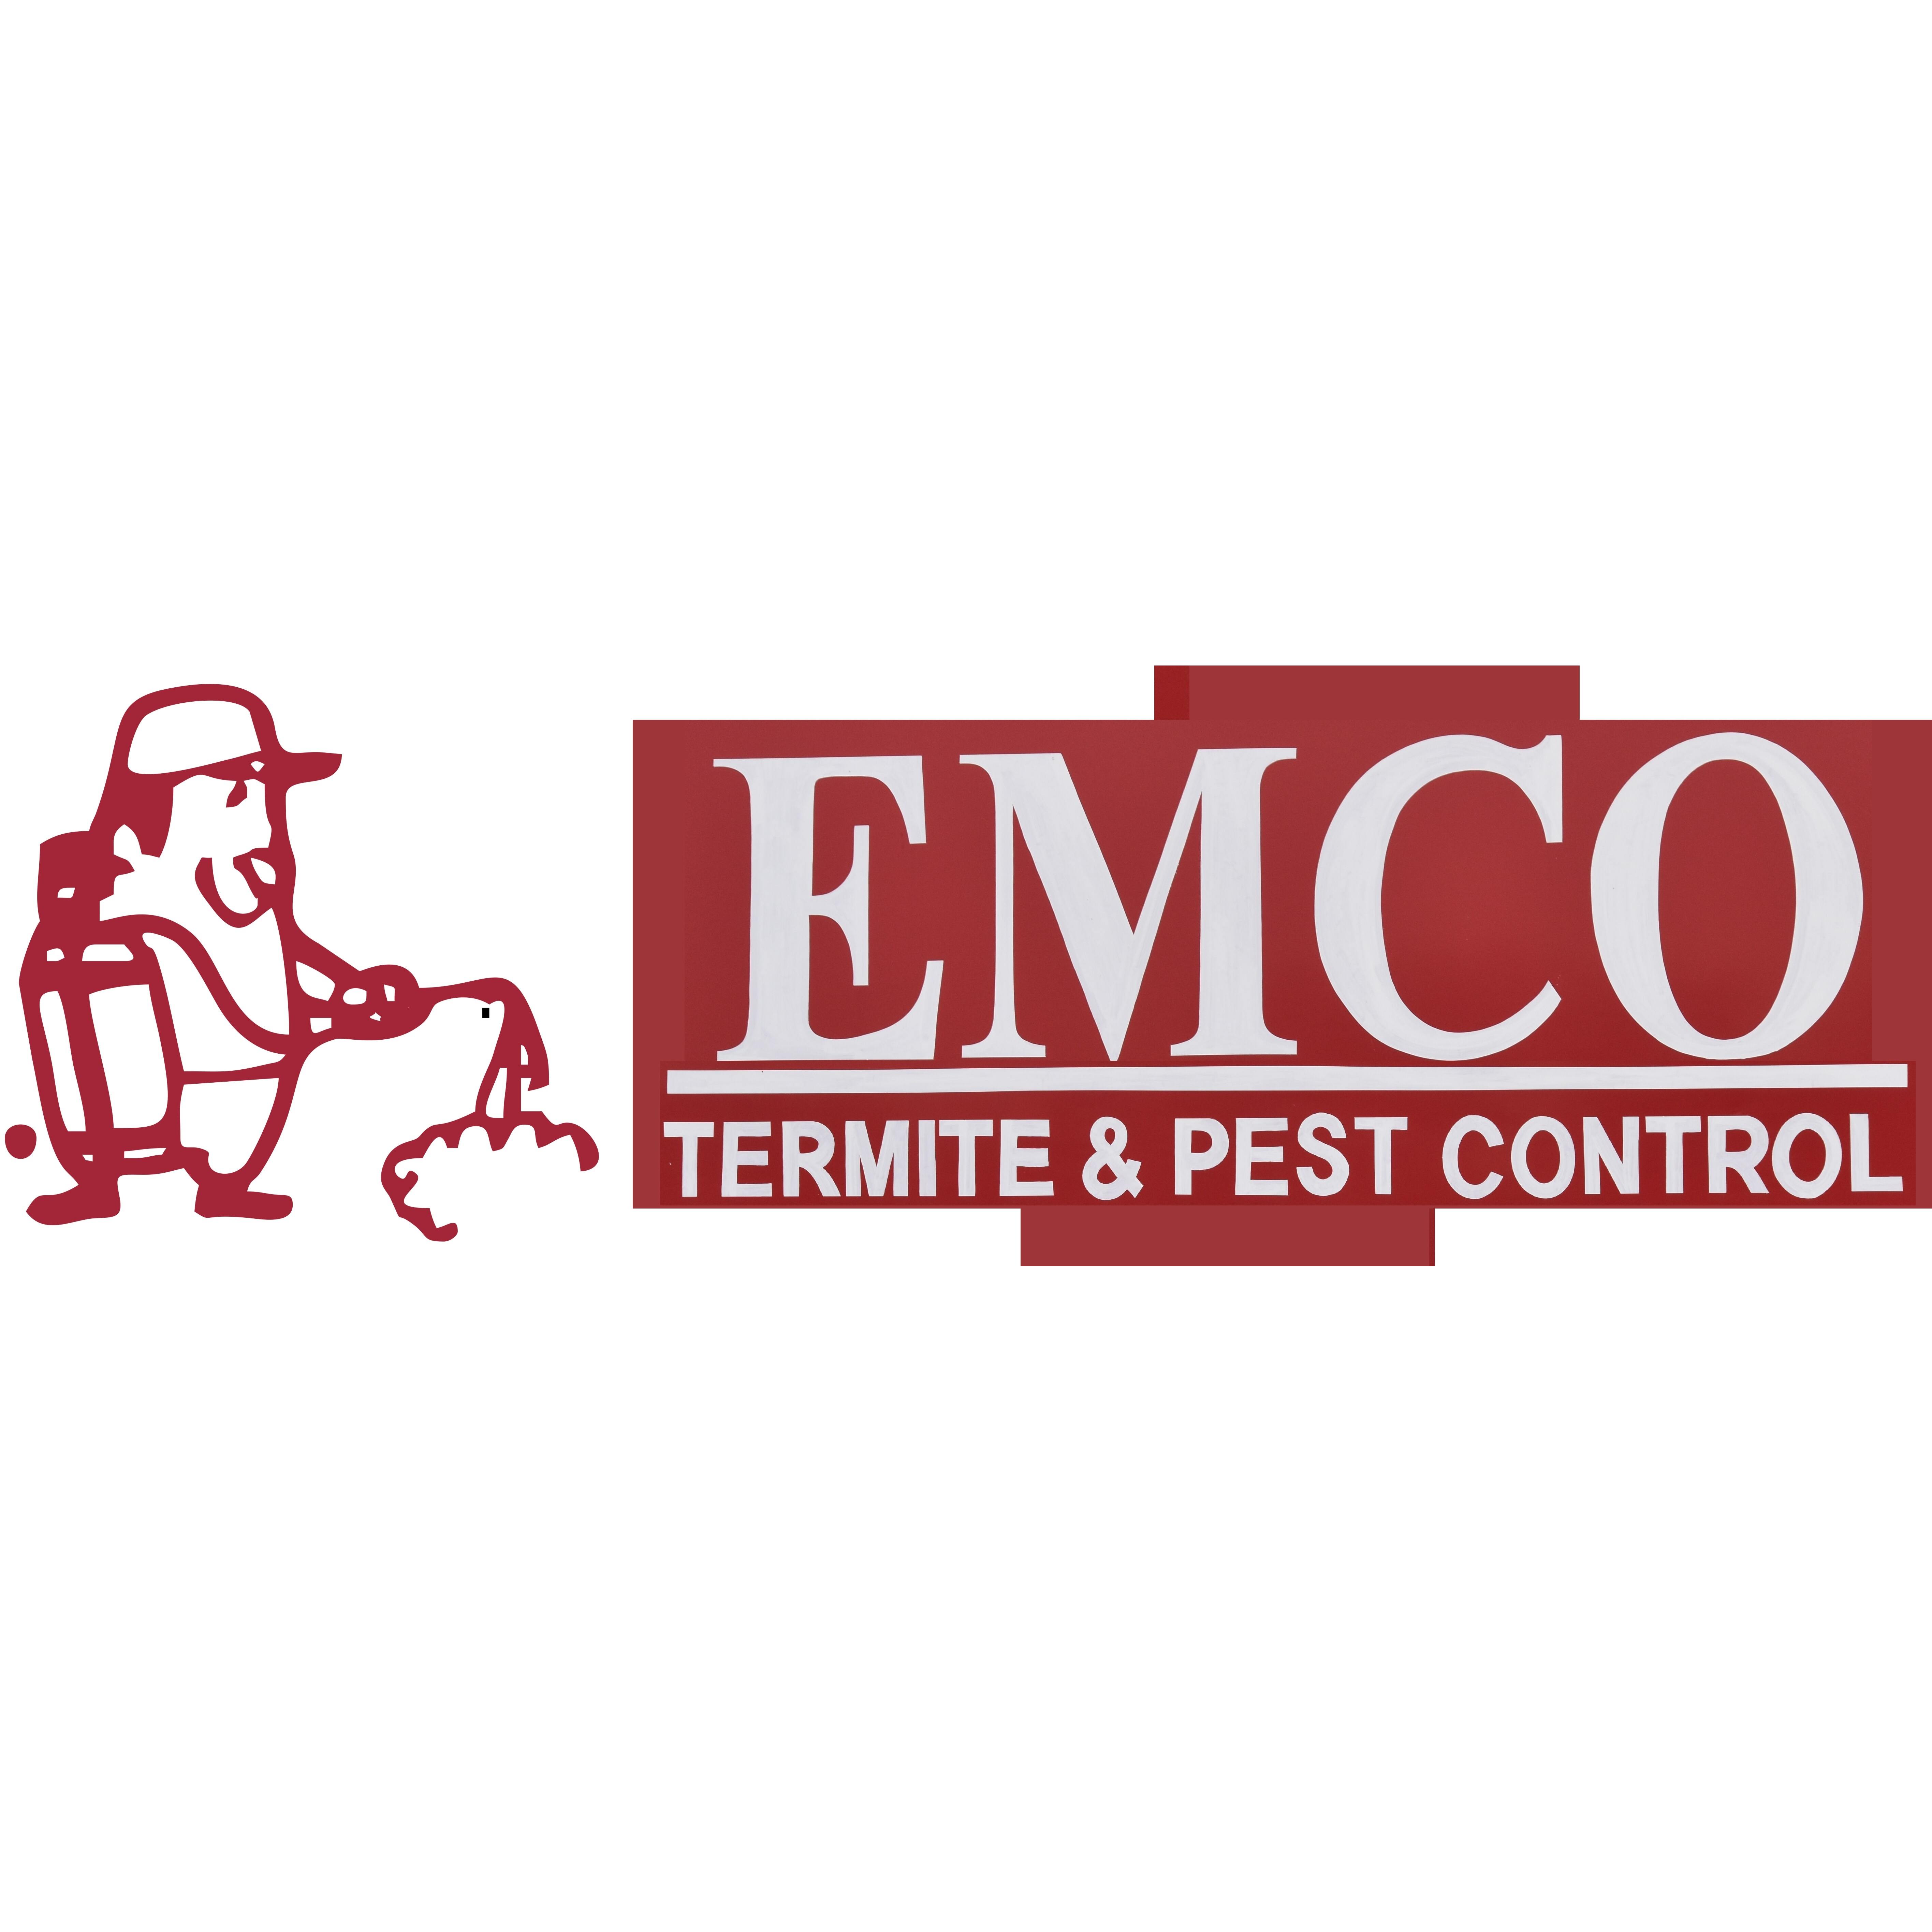 EMCO Termite and Pest Control of Tulsa